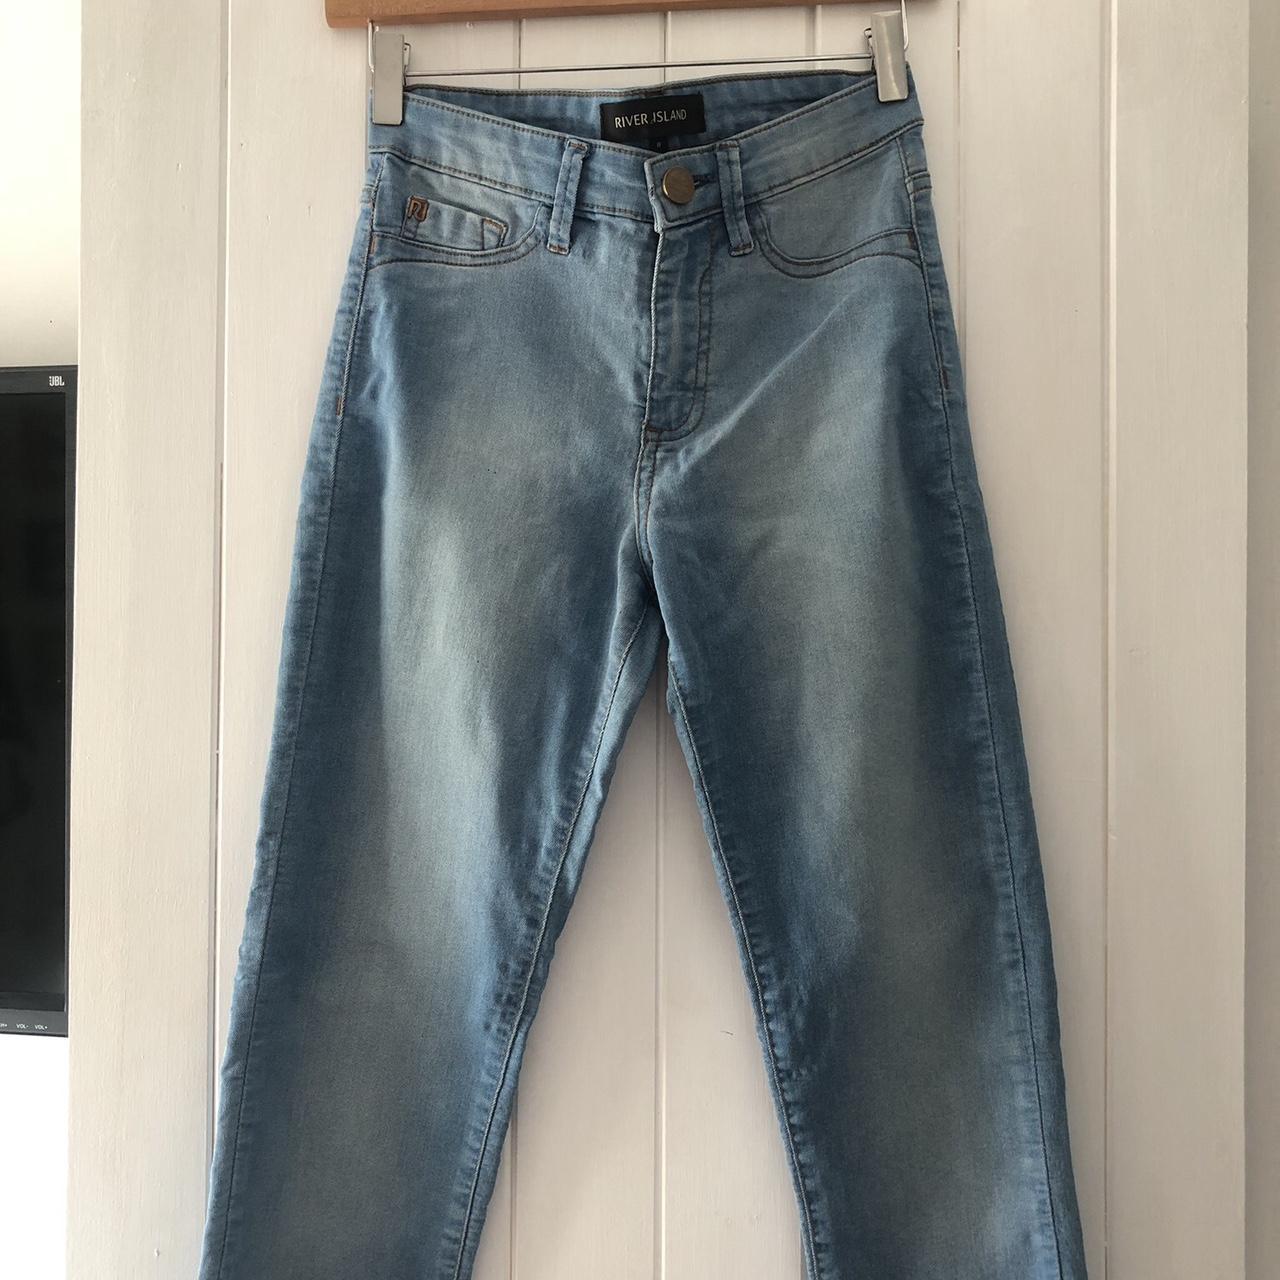 Medium wash denim skinny jeans, River Island. Size... - Depop